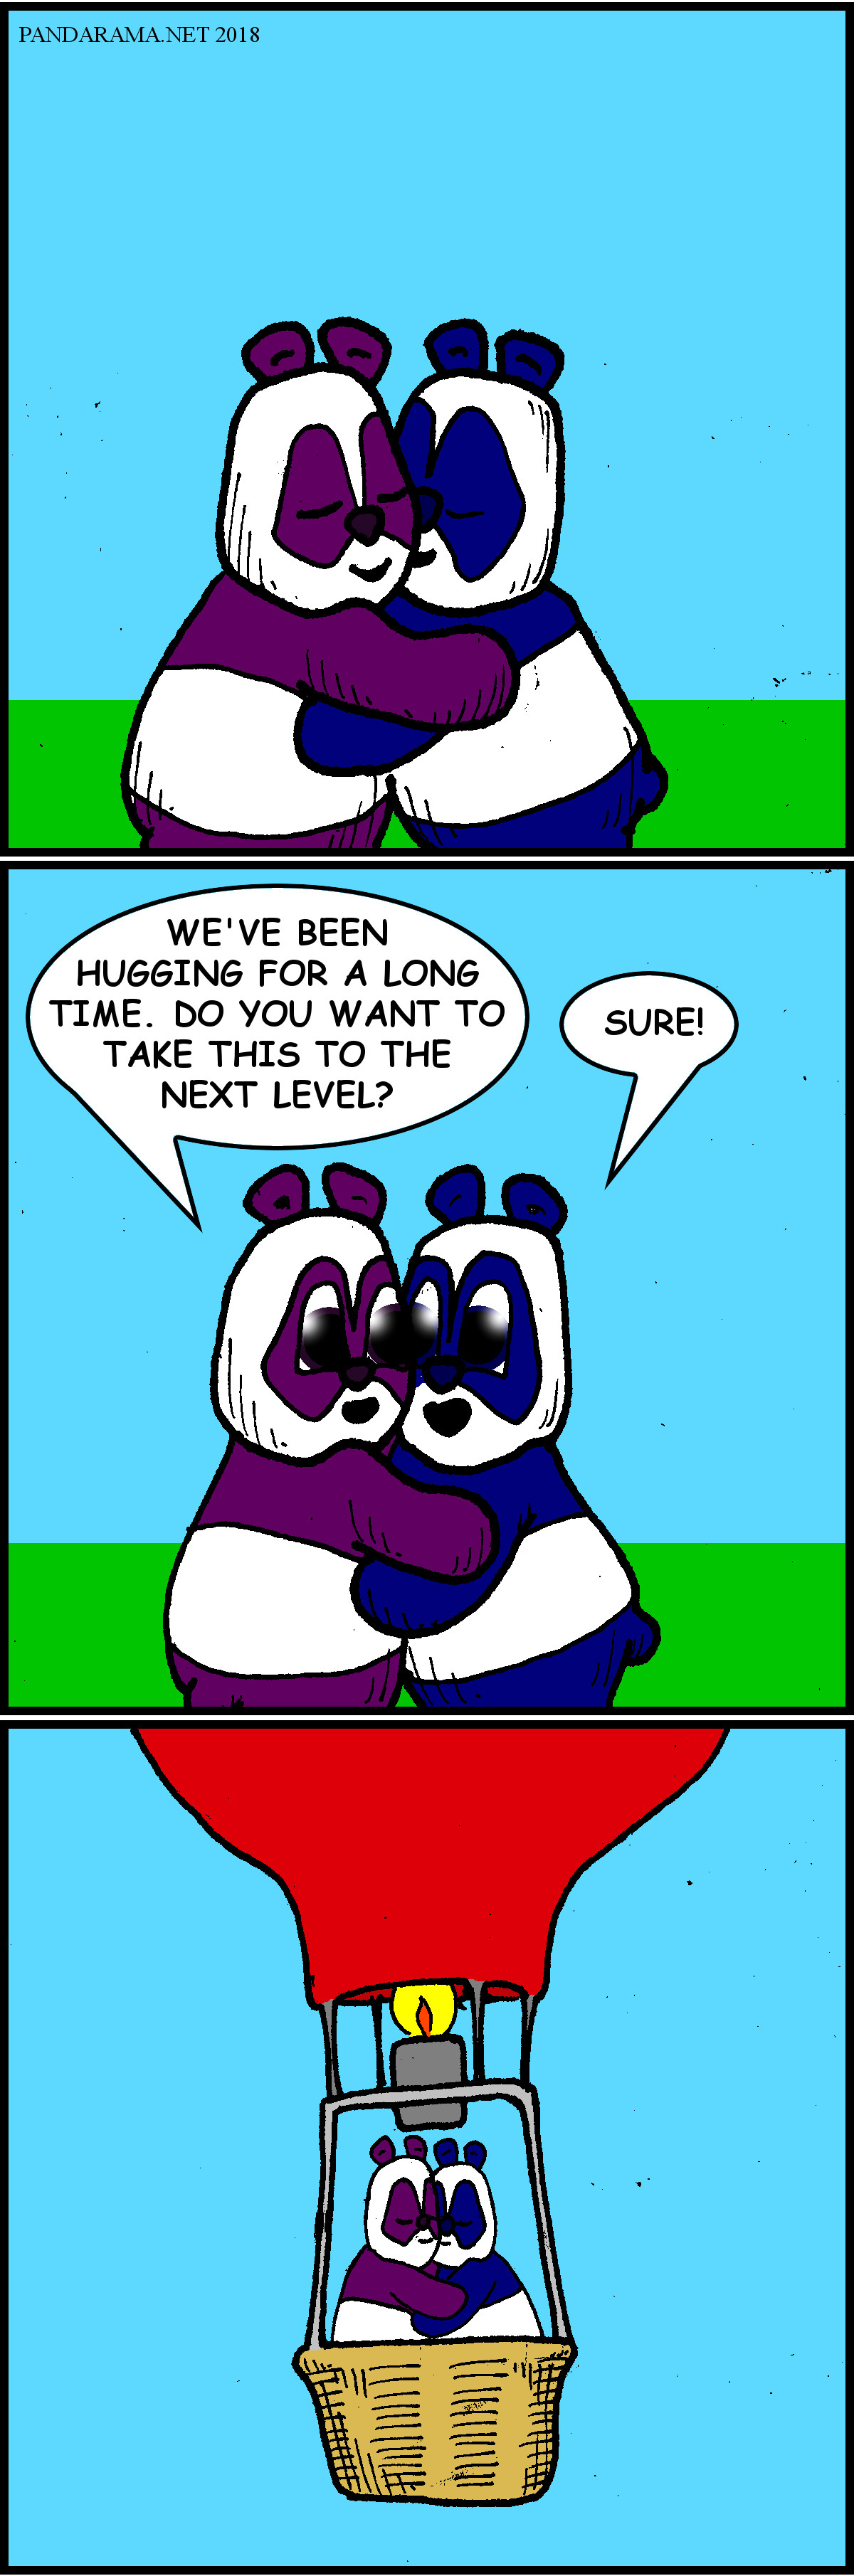 webcomic where pandas are hugging. pandas agree to take it to the next level. then pandas hug in a balloon